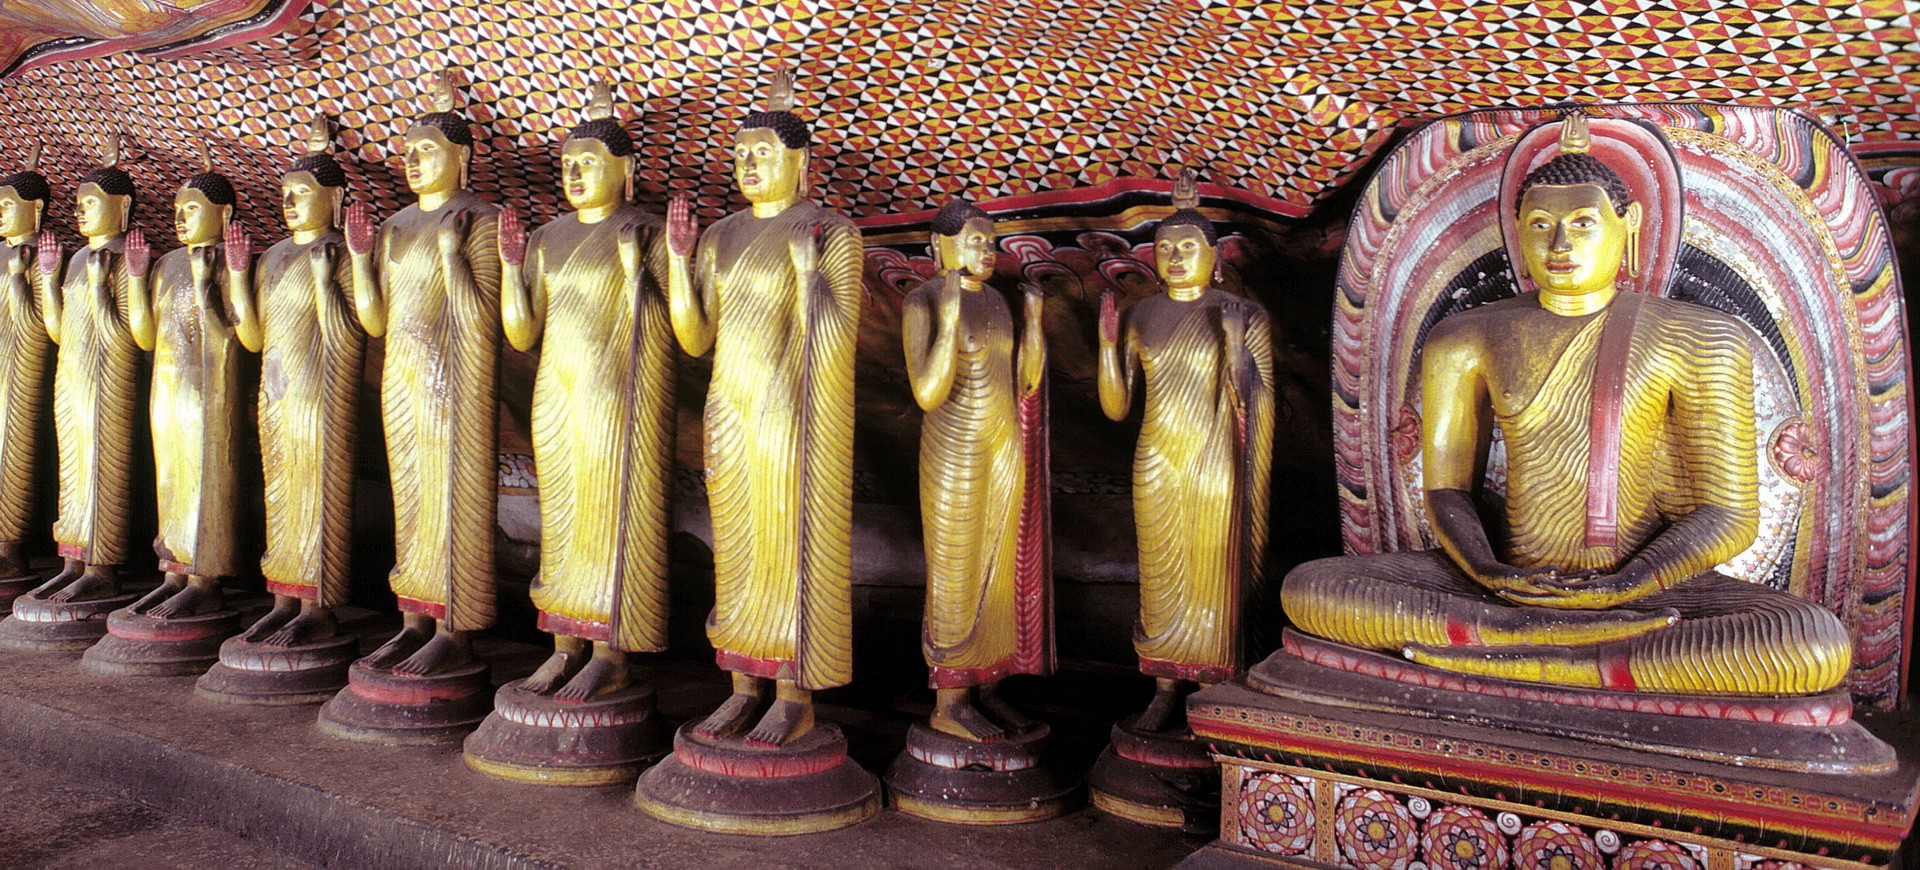 Sri Lanka Dambulla Statues de Bouddha dans le Monastère dans la Grotte